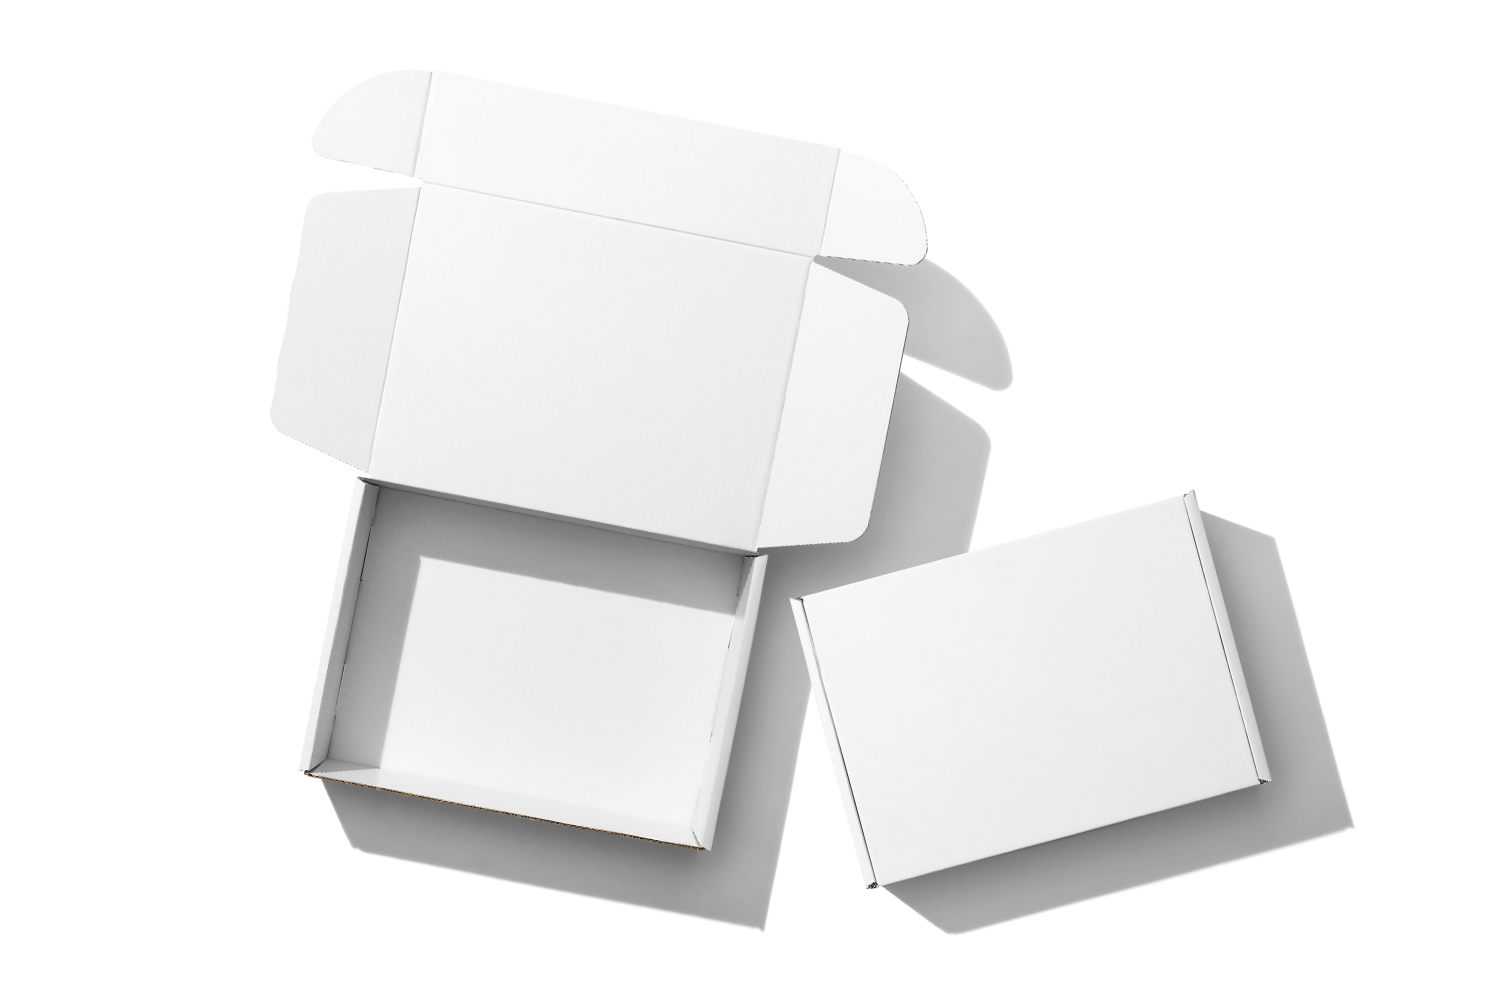 Cardboard Mailer Boxes